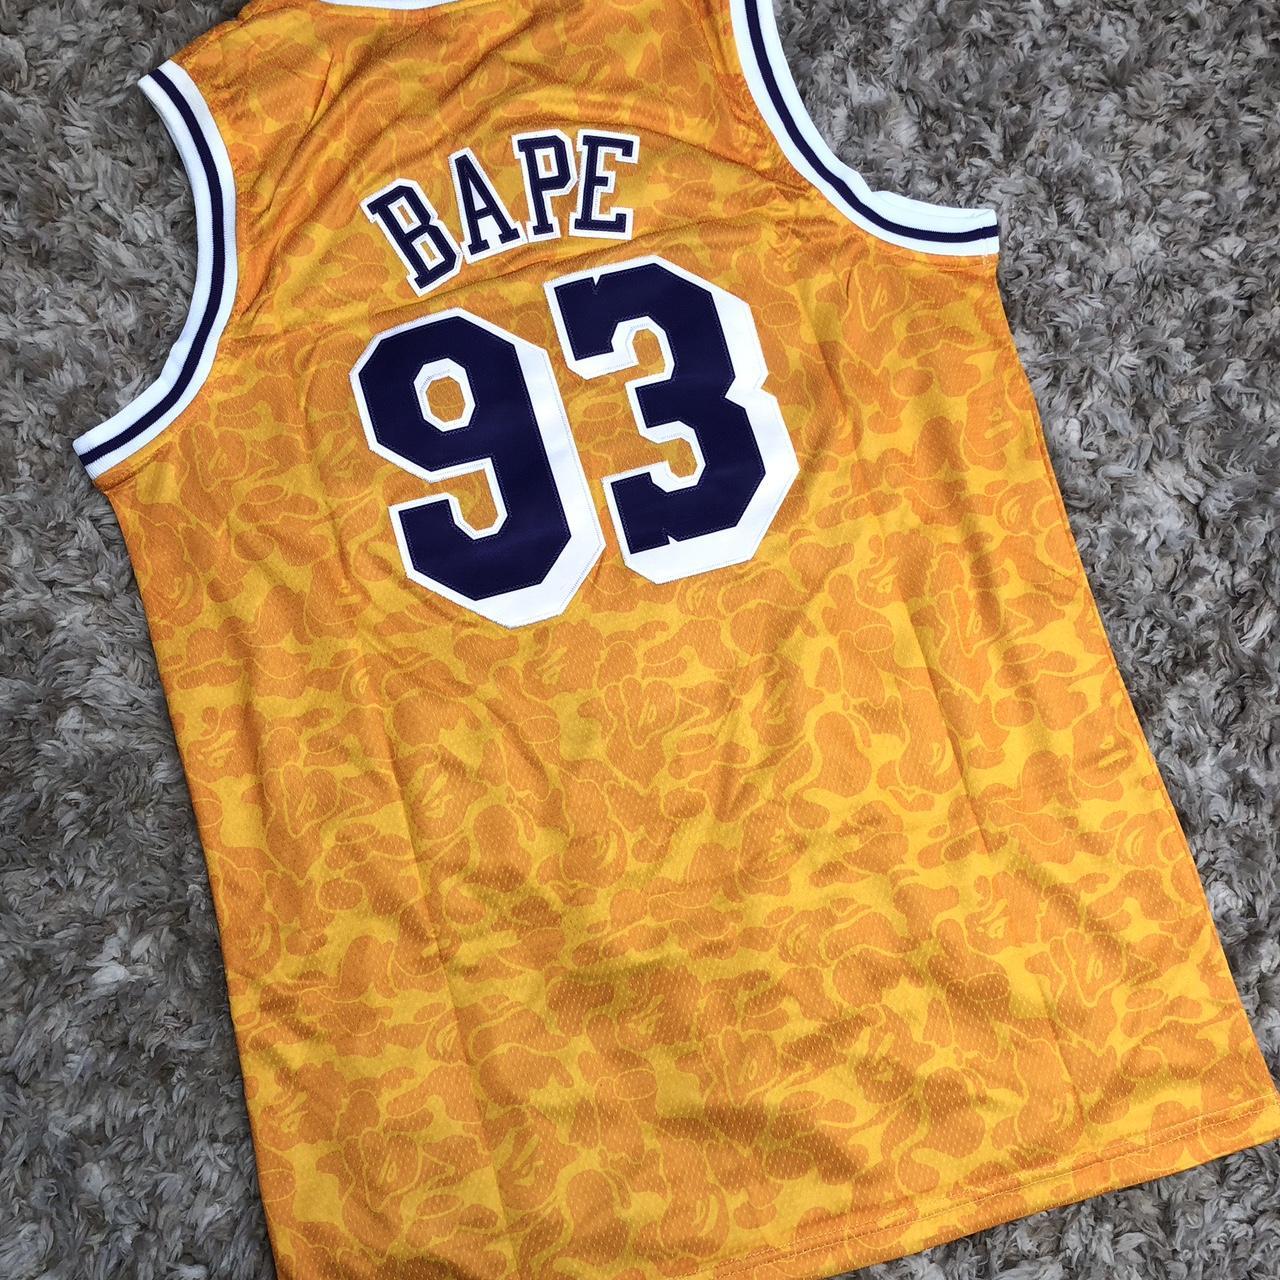 Bape x LAKERS NBA Jersey  Bape shirt, Bape, Nba jersey